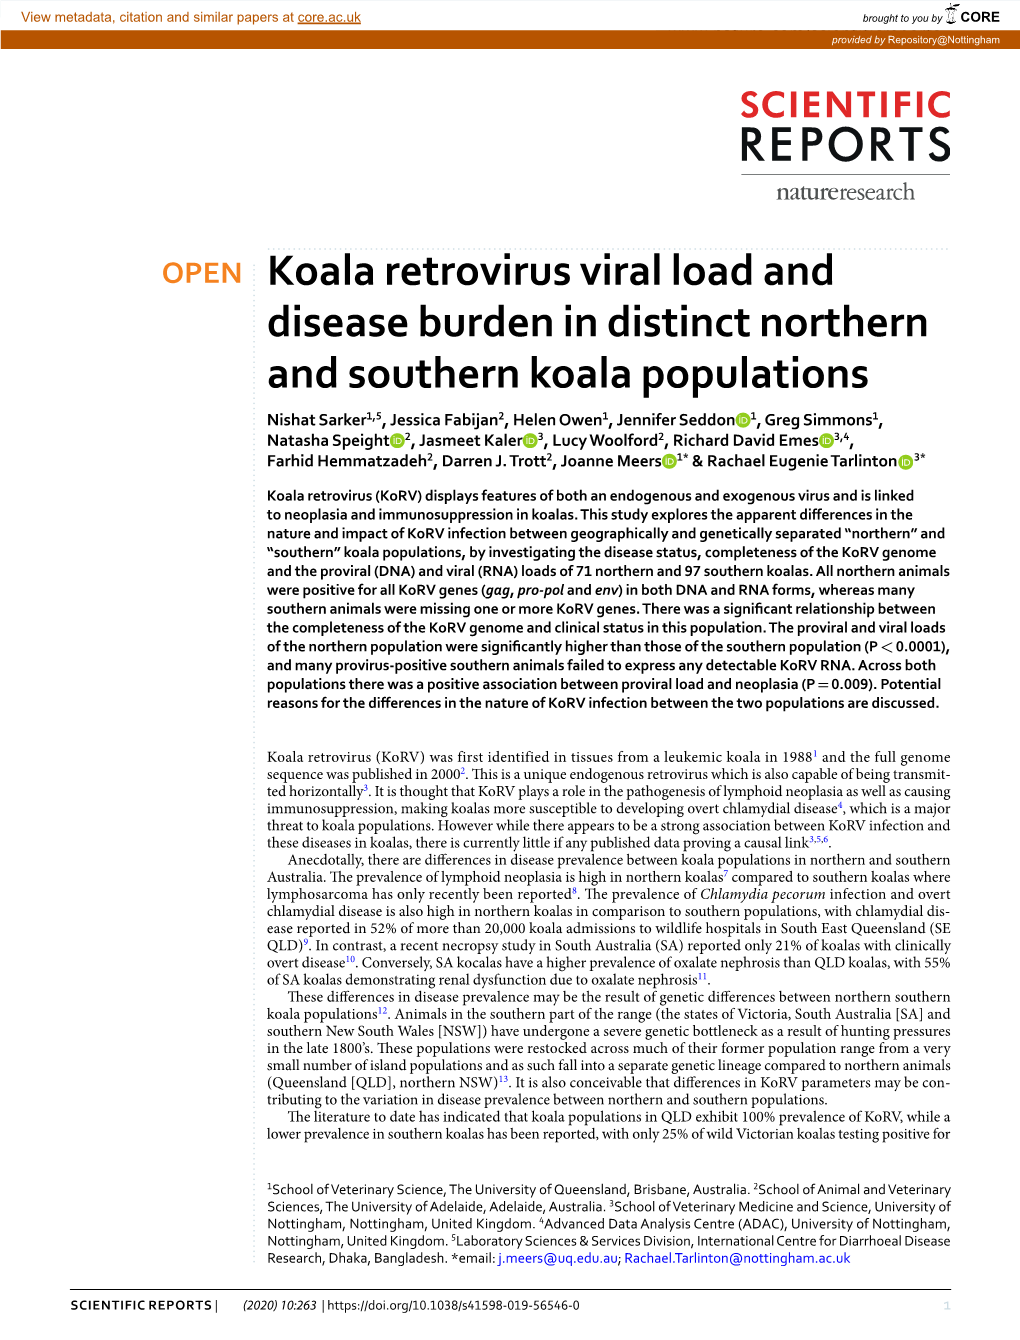 Koala Retrovirus Viral Load and Disease Burden in Distinct